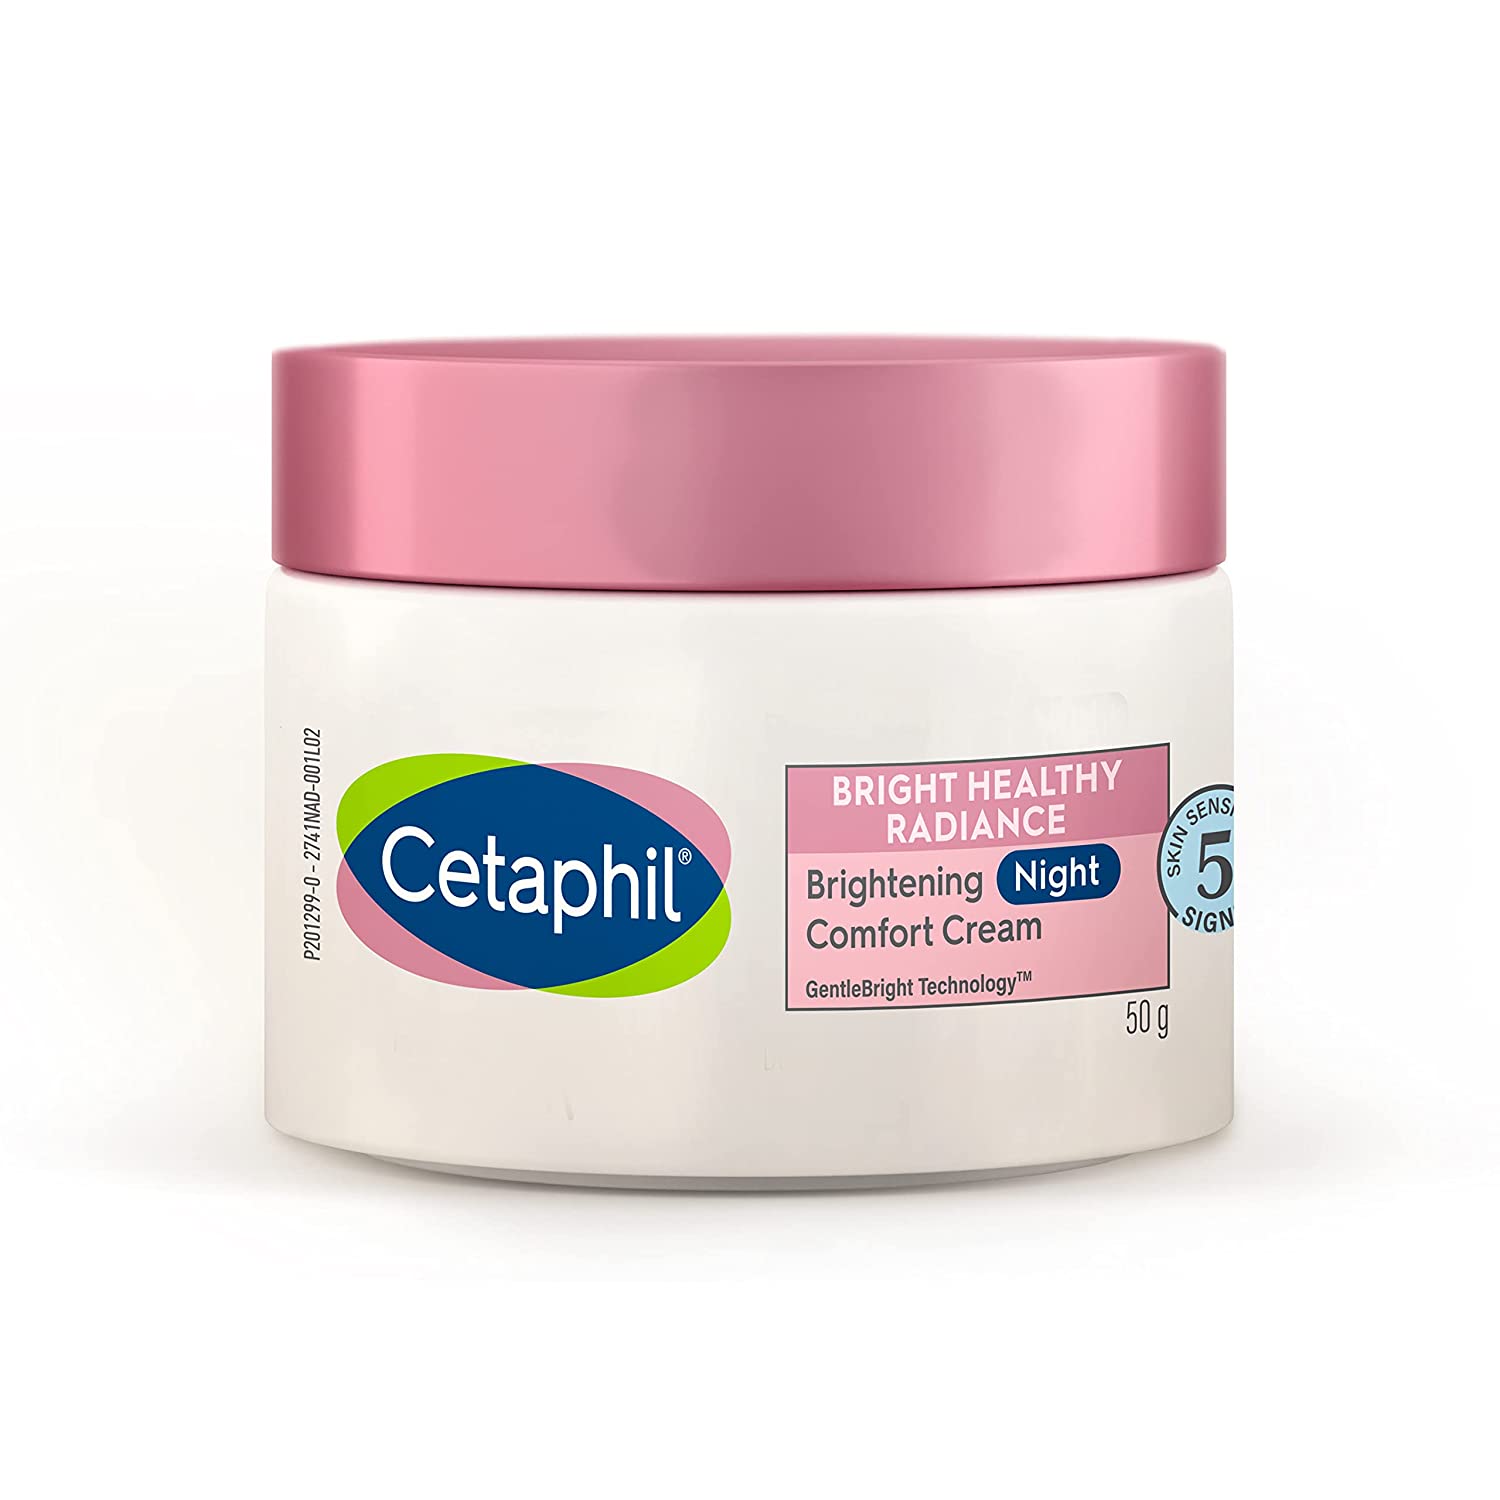 Cetaphil Bright Healthy Radiance Brightening Night Comfort Cream (50 g) Cetaphil